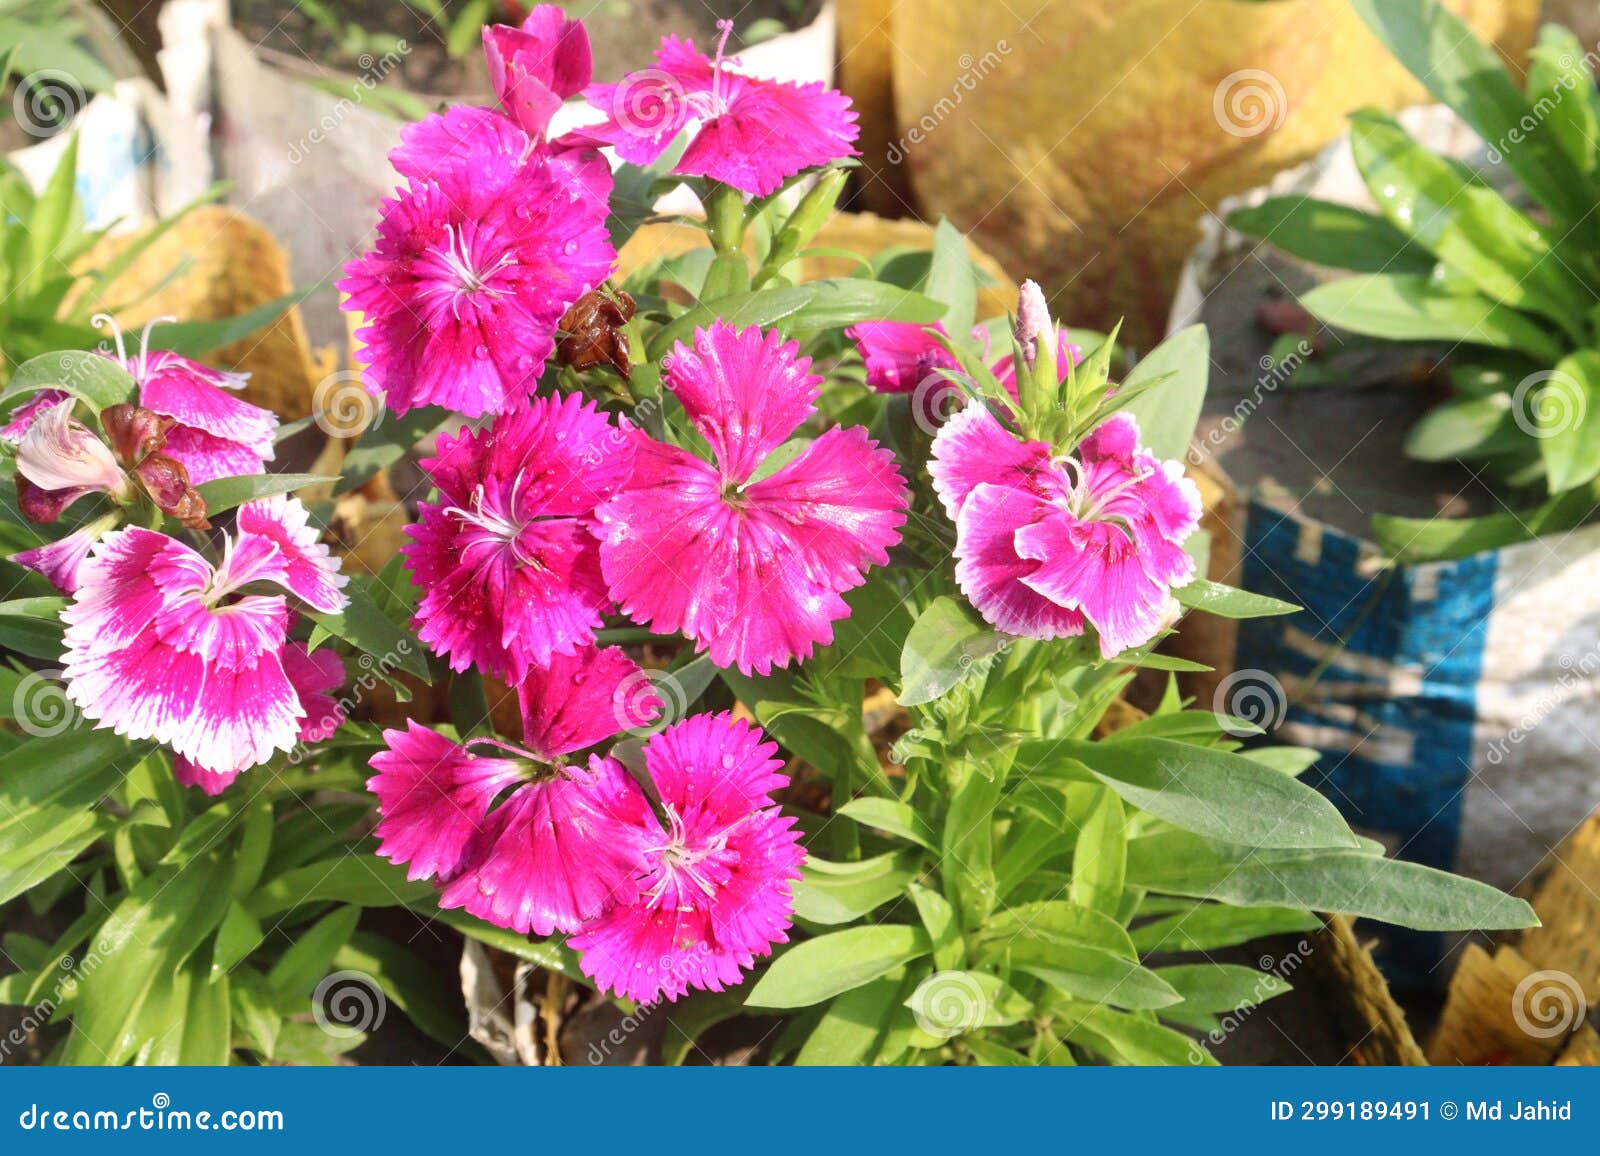 Telstar Carmine Rose Dianthus Flower Plant Stock Image - Image of pink ...